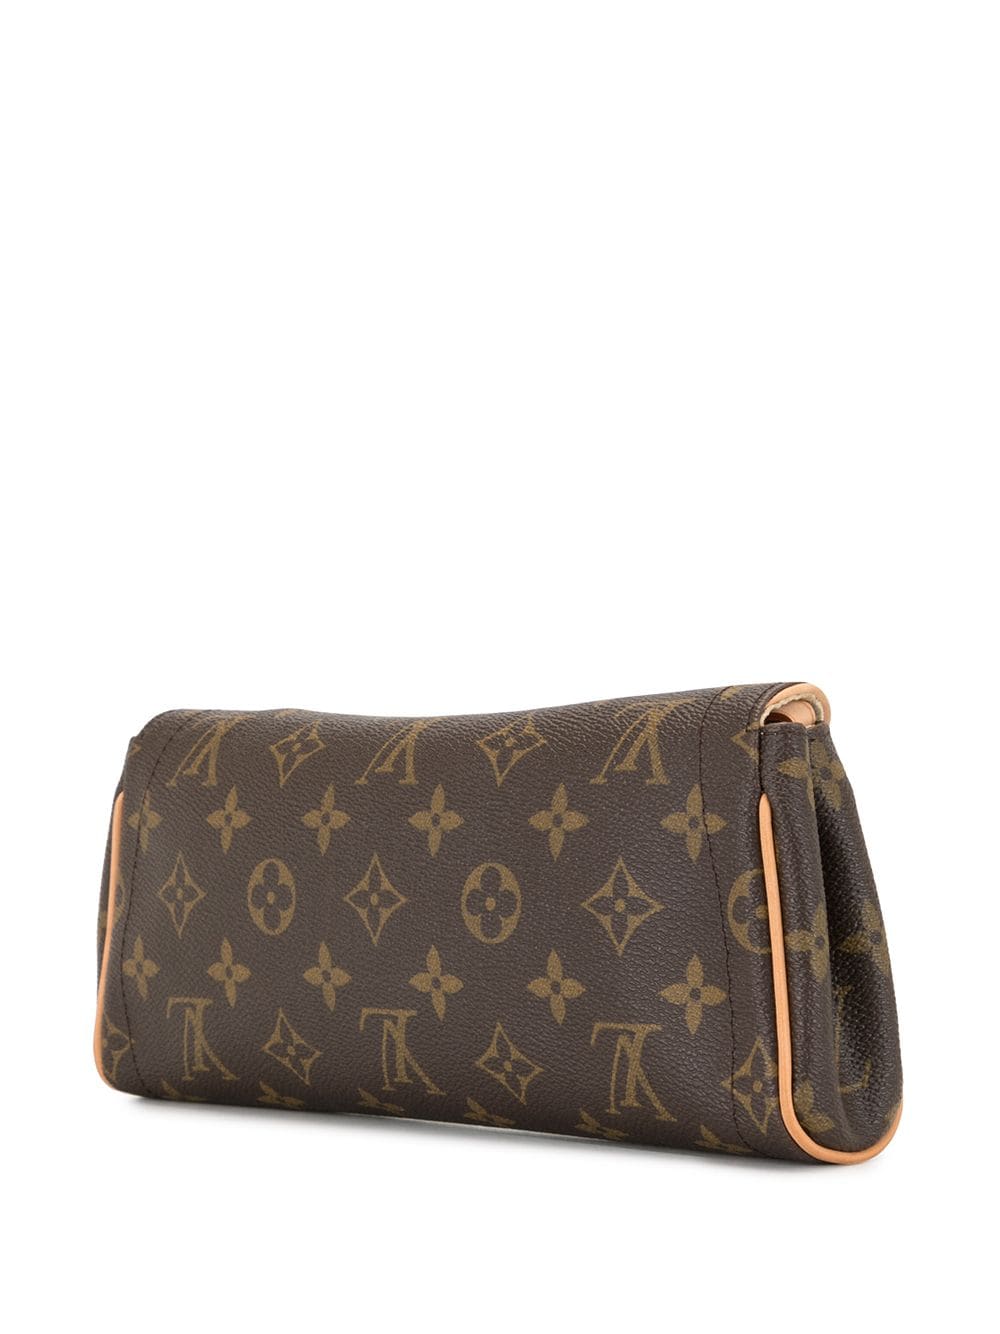 Louis Vuitton Demi Ronde Brown Canvas Clutch Bag (Pre-Owned)